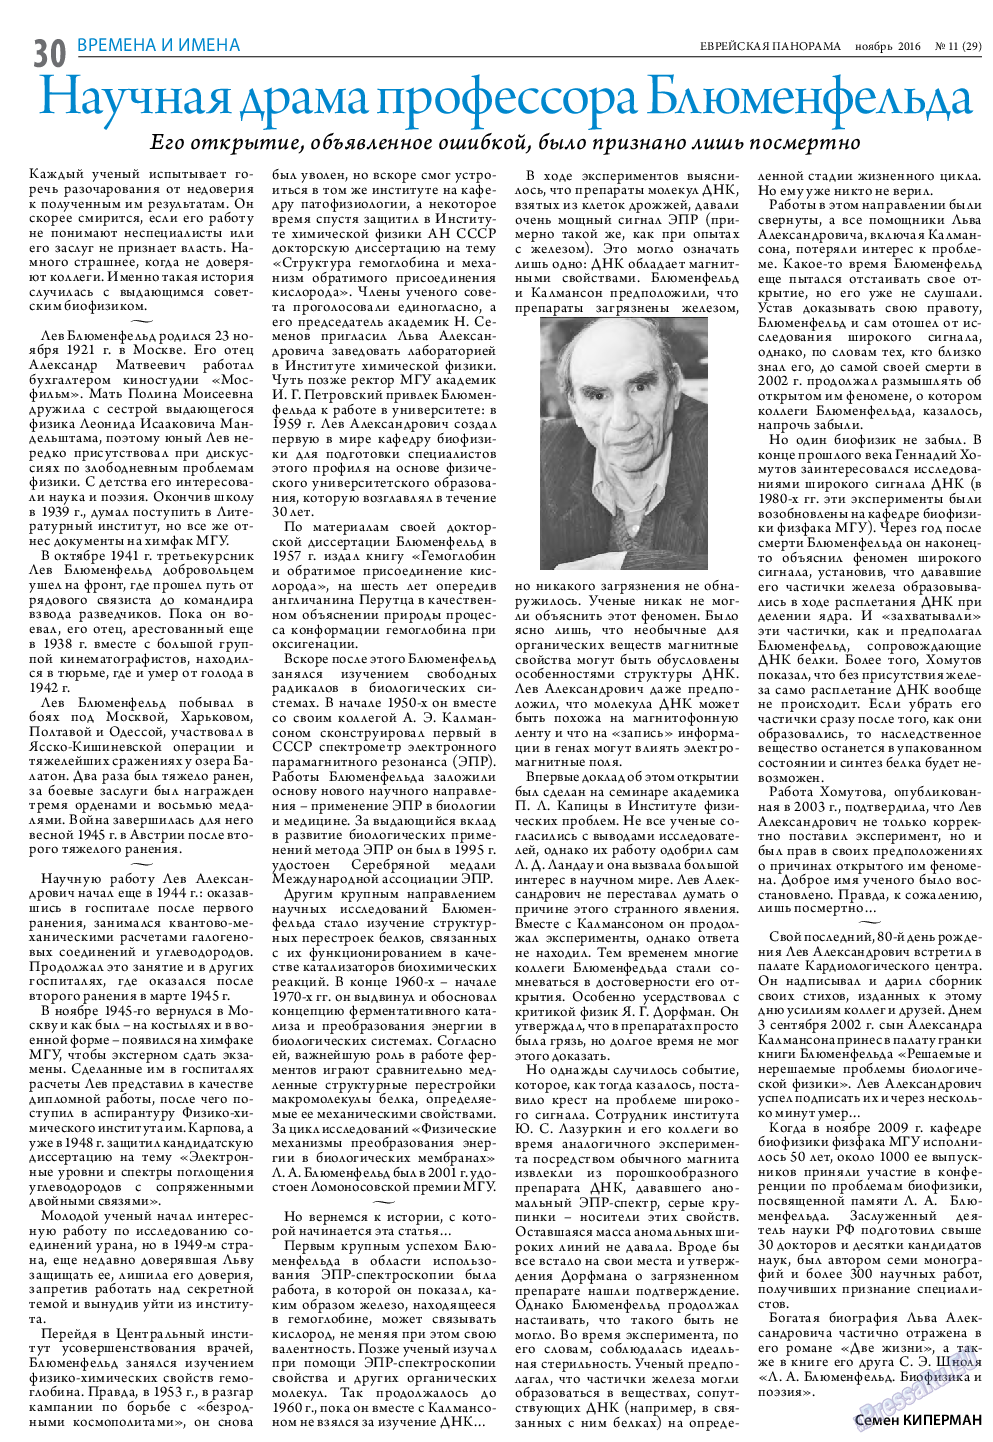 Еврейская панорама, газета. 2016 №11 стр.30